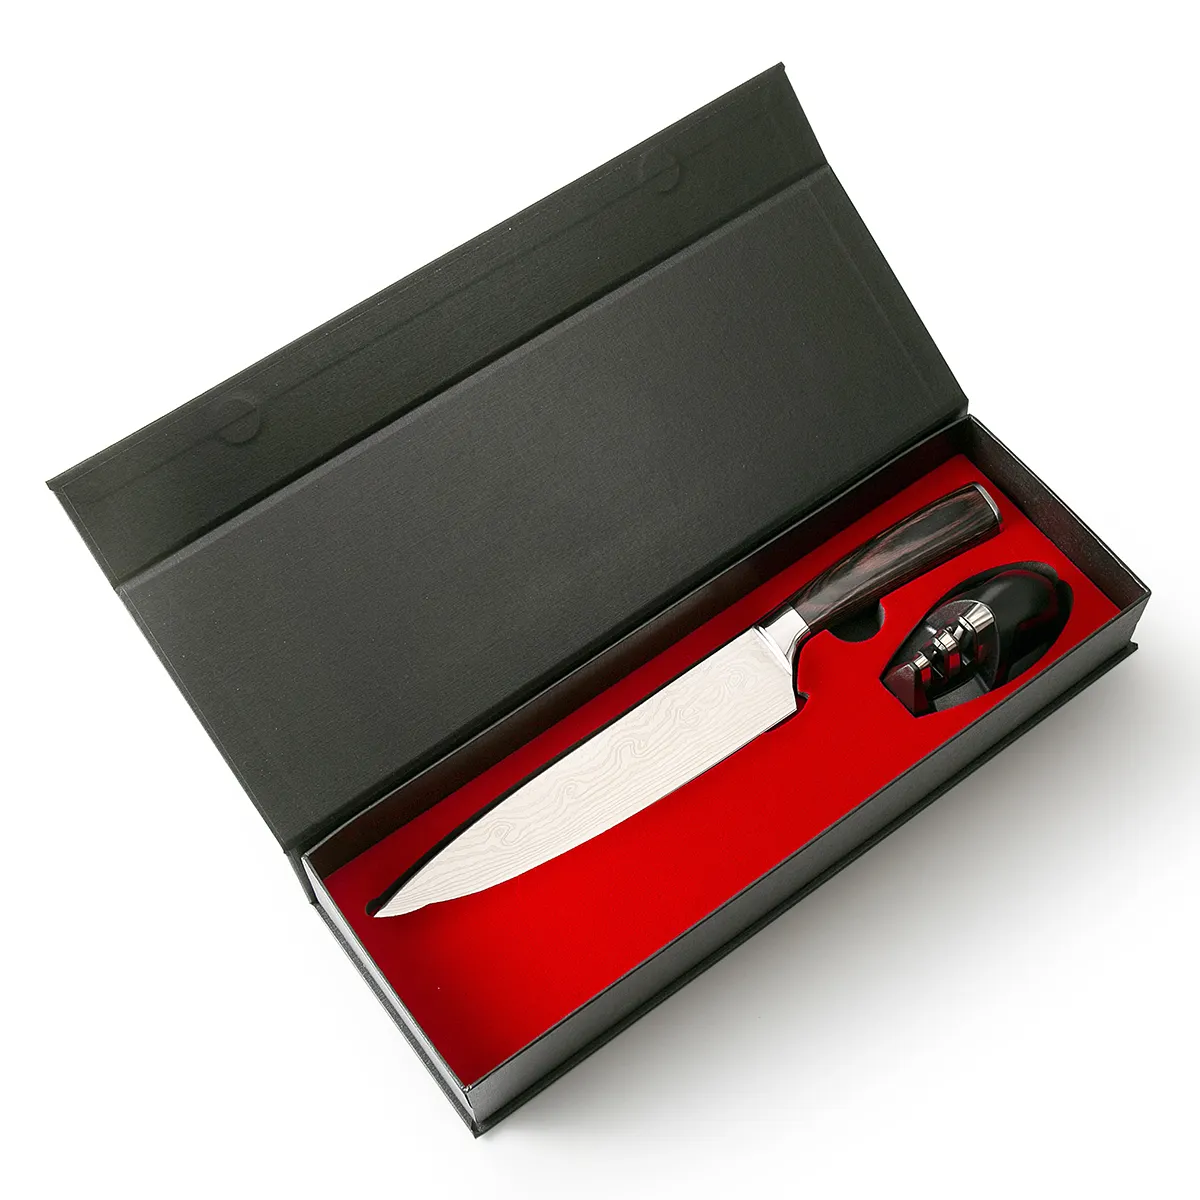 Cuchillo profesional de chef Damasco láser de 8 pulgadas, acero inoxidable 2020, con mini afilador para juego de combinación, paquete de caja de regalo